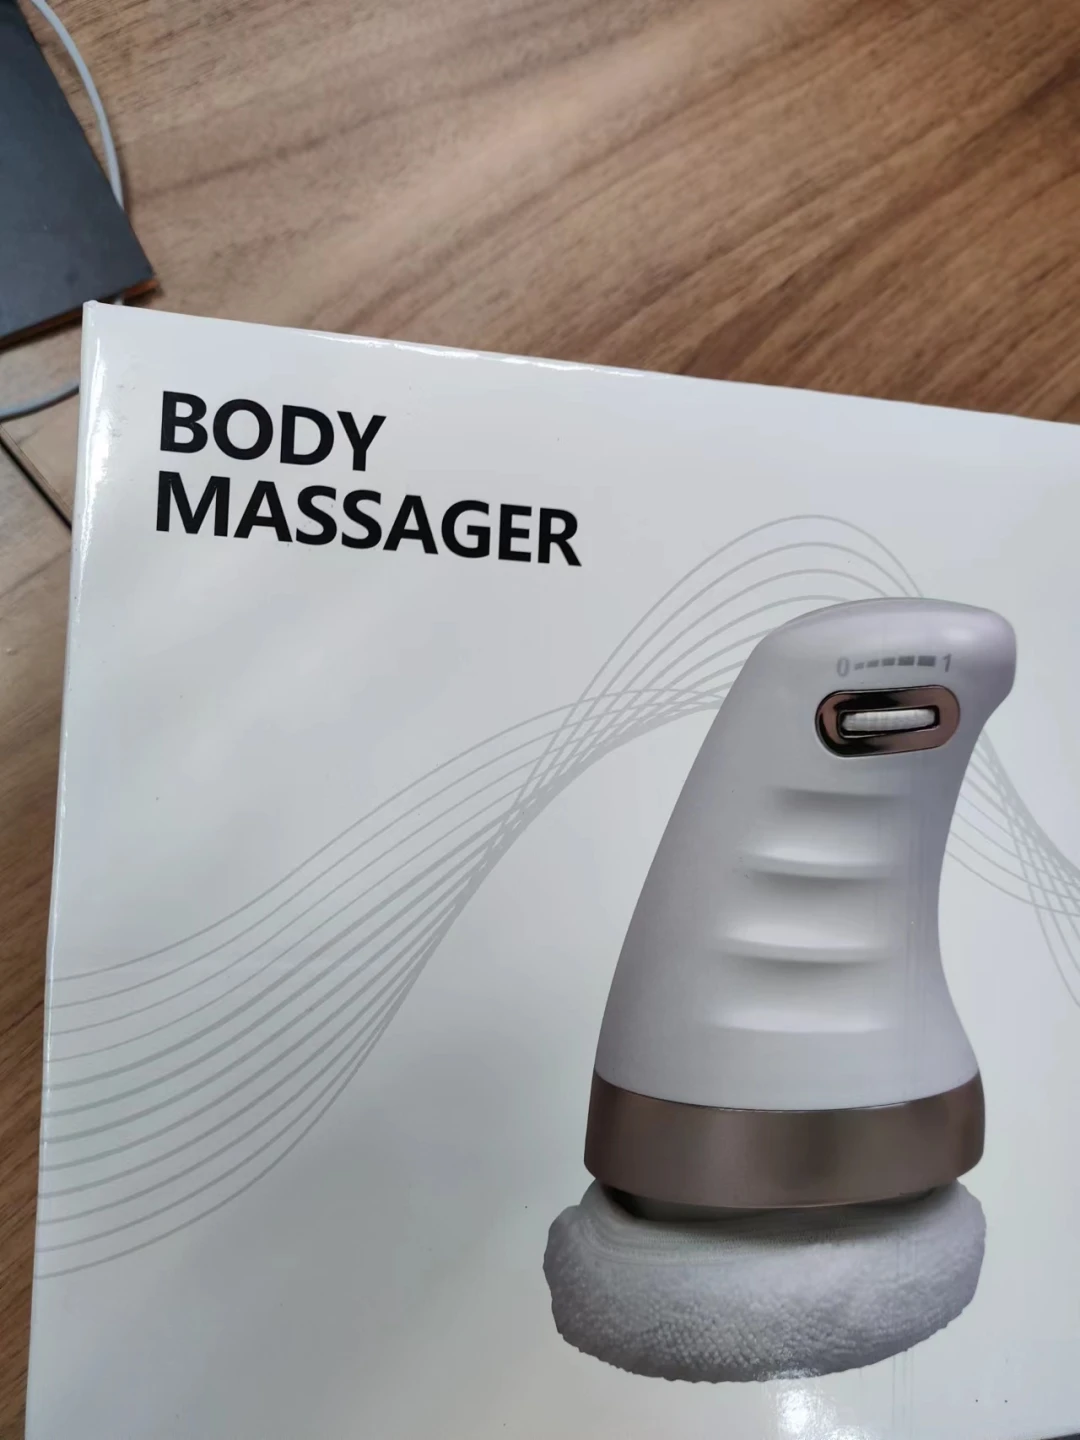 Body Sculpting Machine, Cellulite Massager, Body Massager — AiRelax